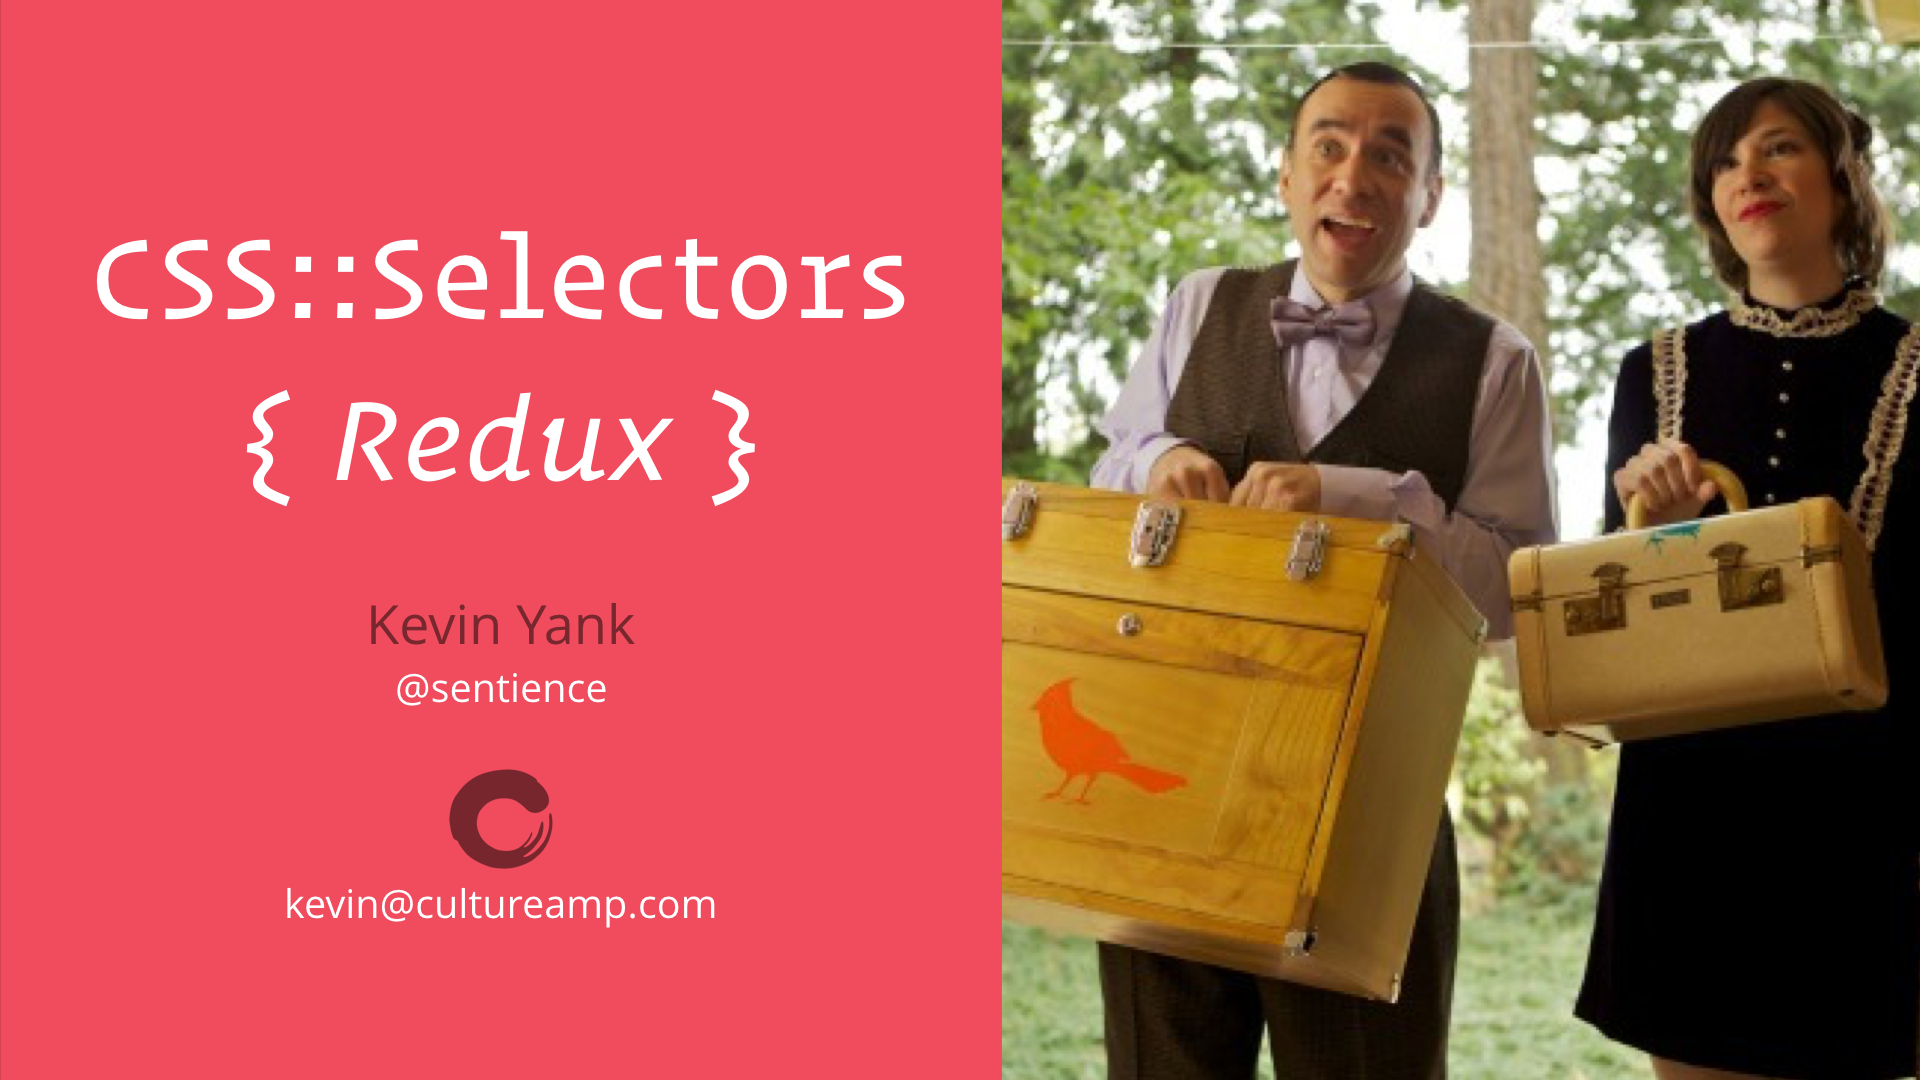 title slide: CSS Selectors Redux. Kevin Yank, @sentience, kevin@cultureamp.com